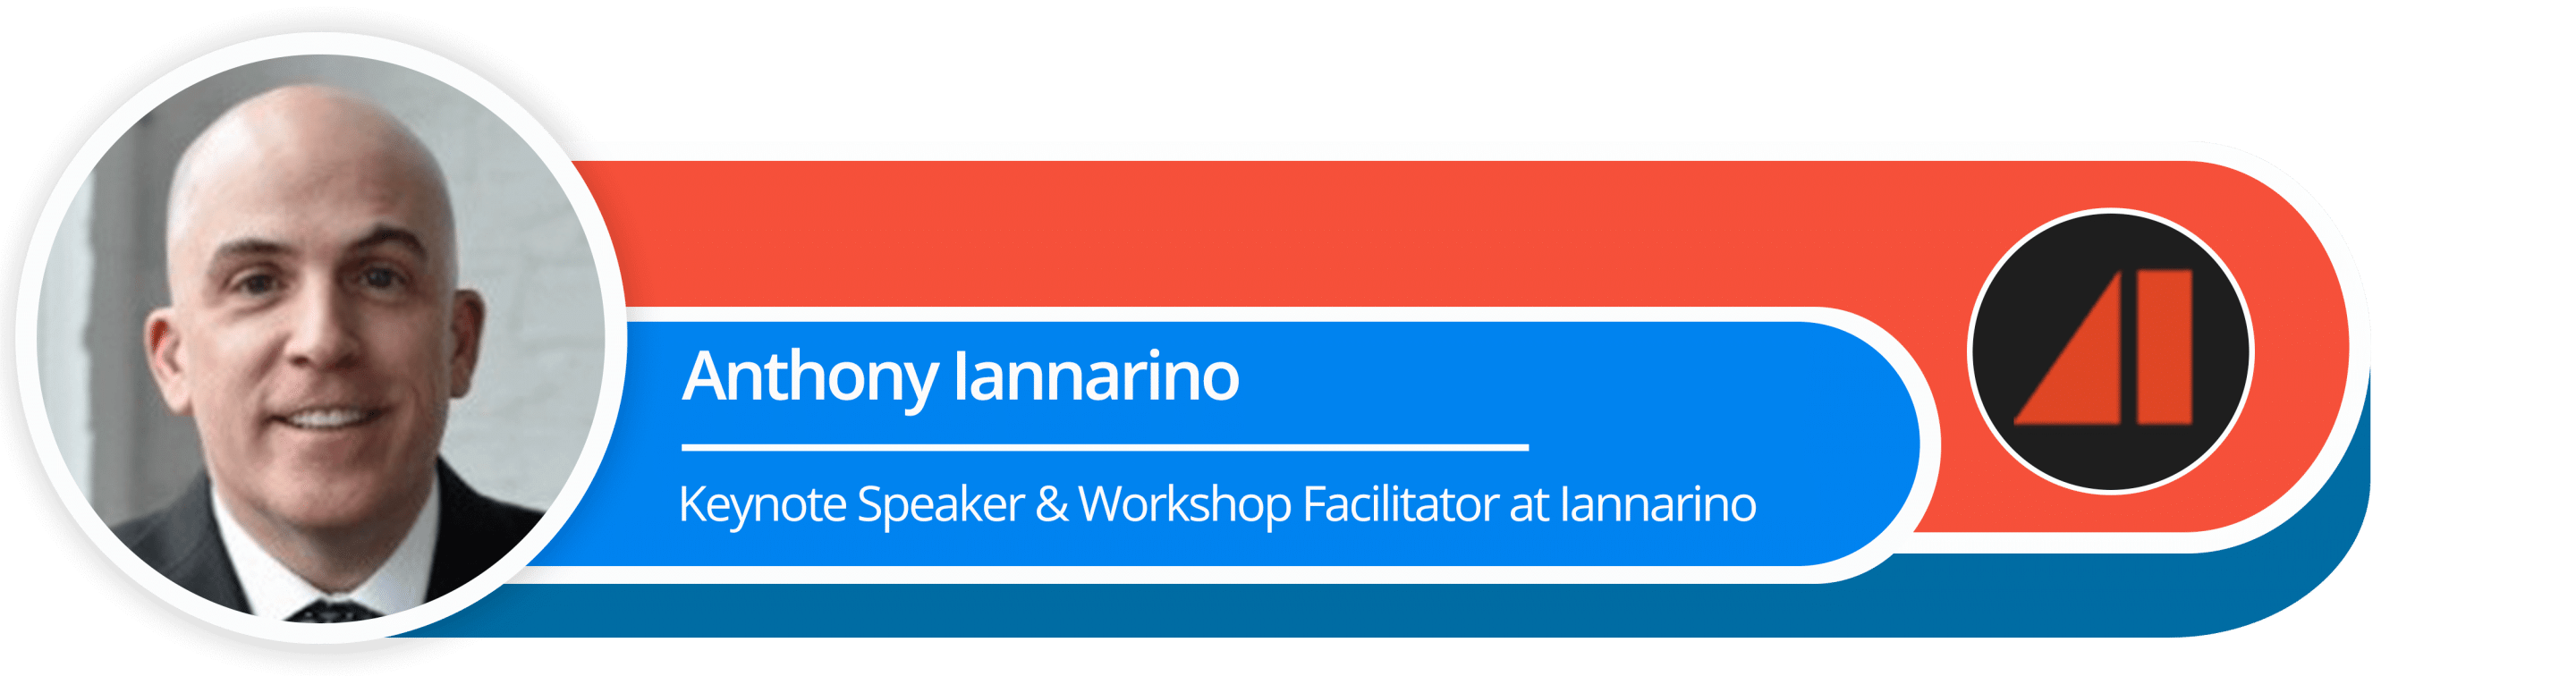 Anthony Iannarino
Keynote Speaker & Workshop Facilitator at Iannarino